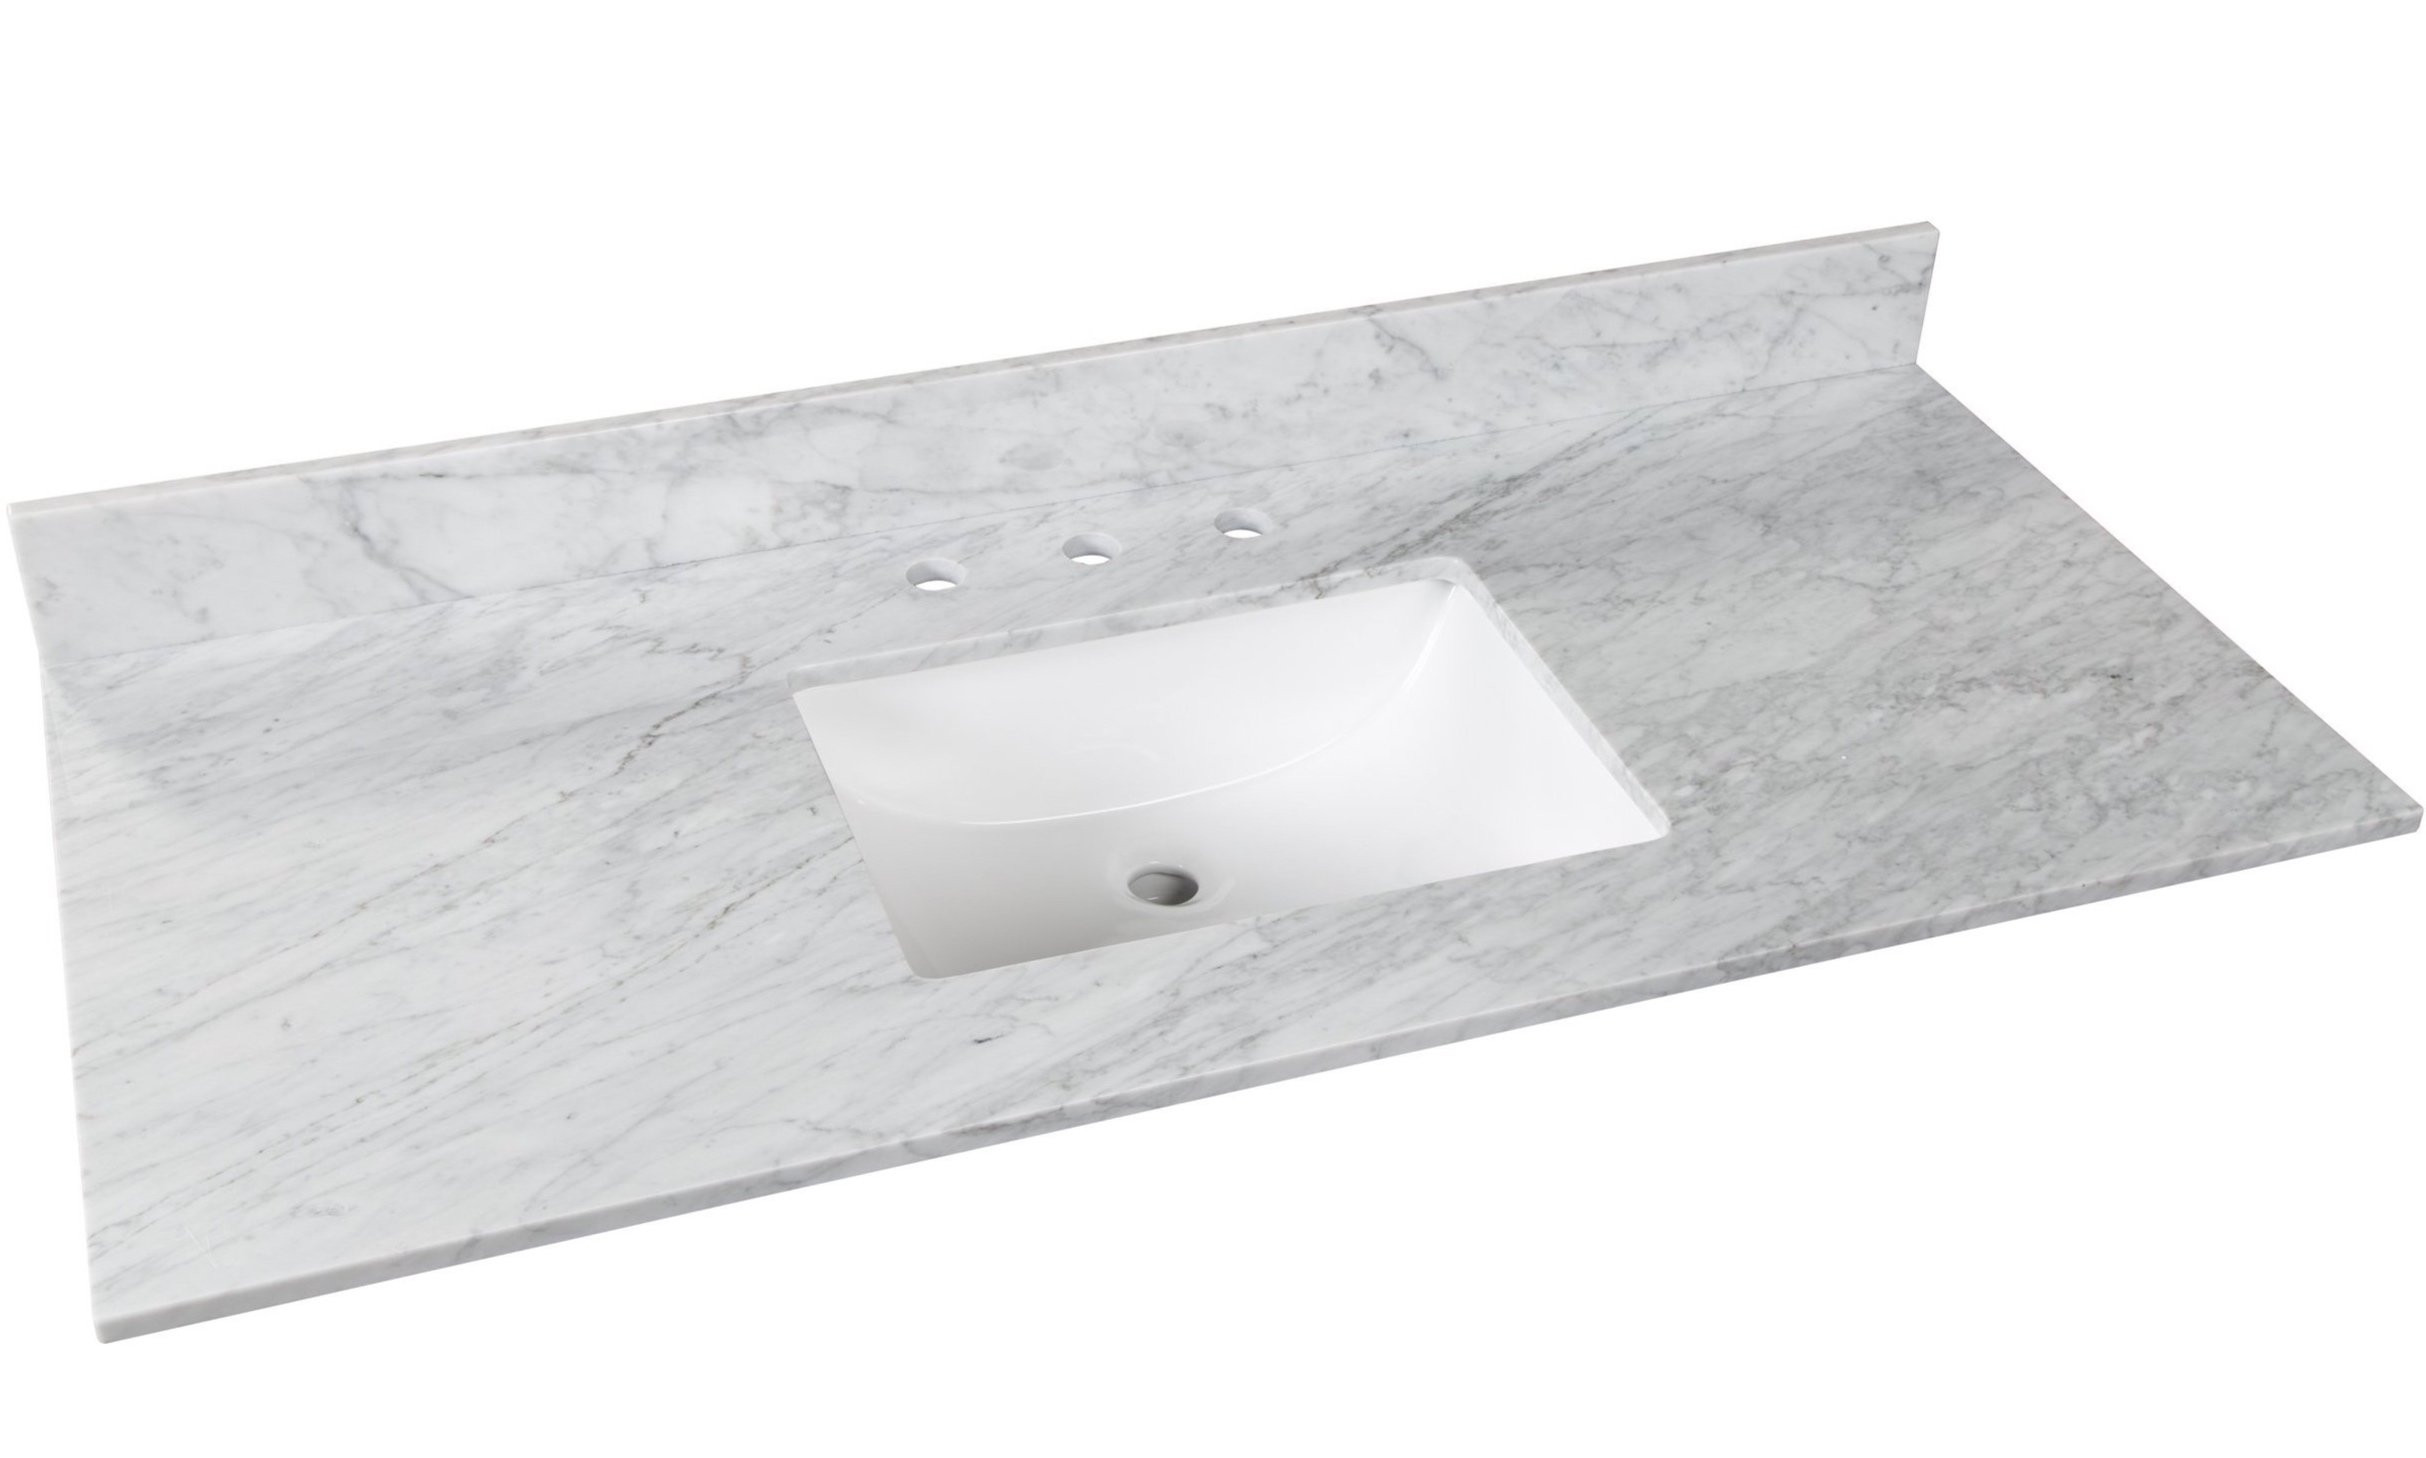 49" bianco carrara marble countertop